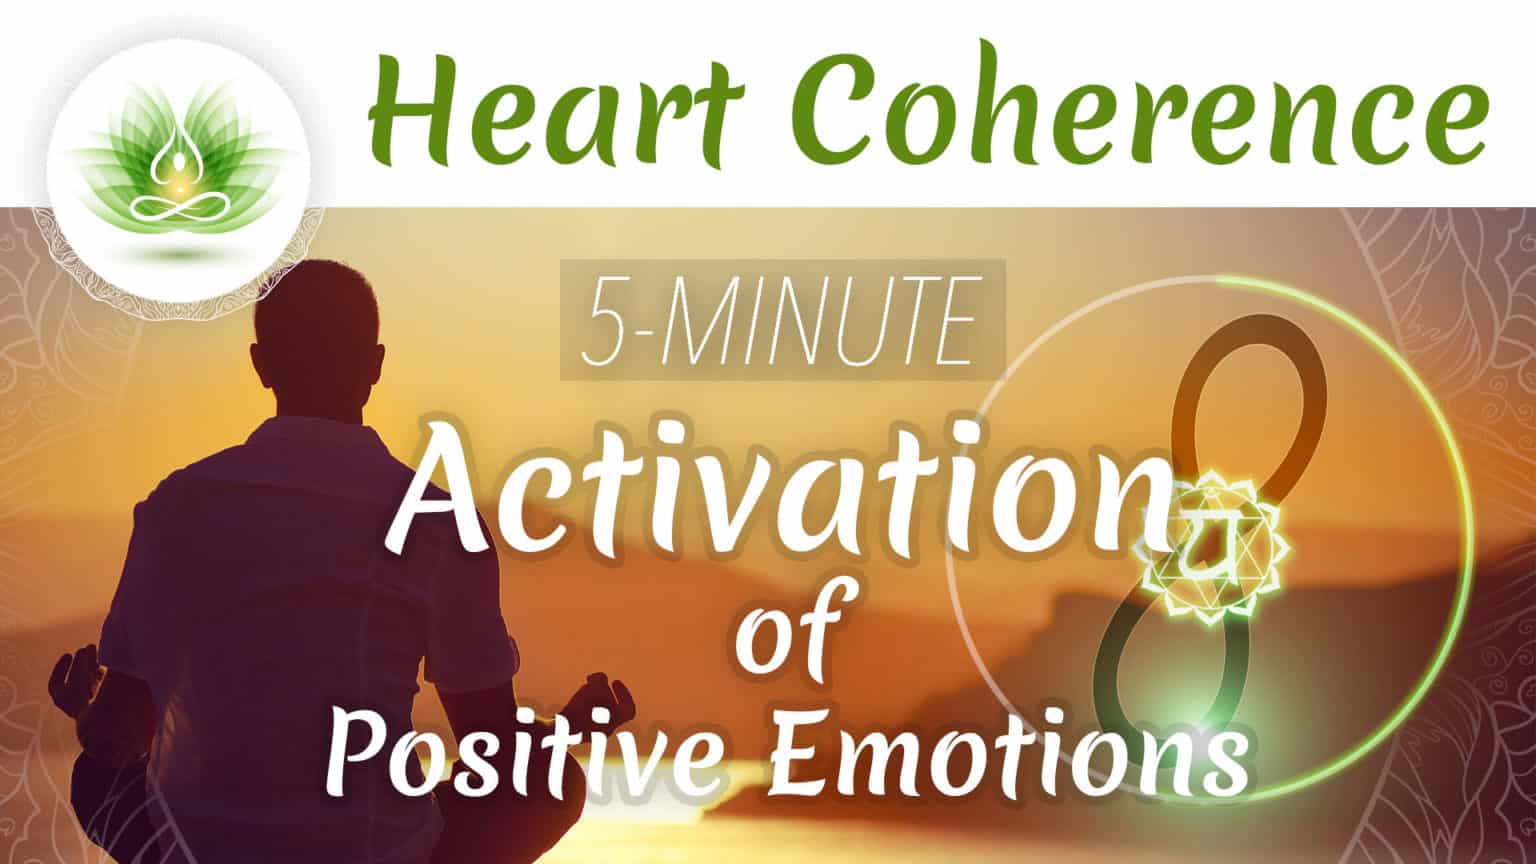 heart brain coherence meditation